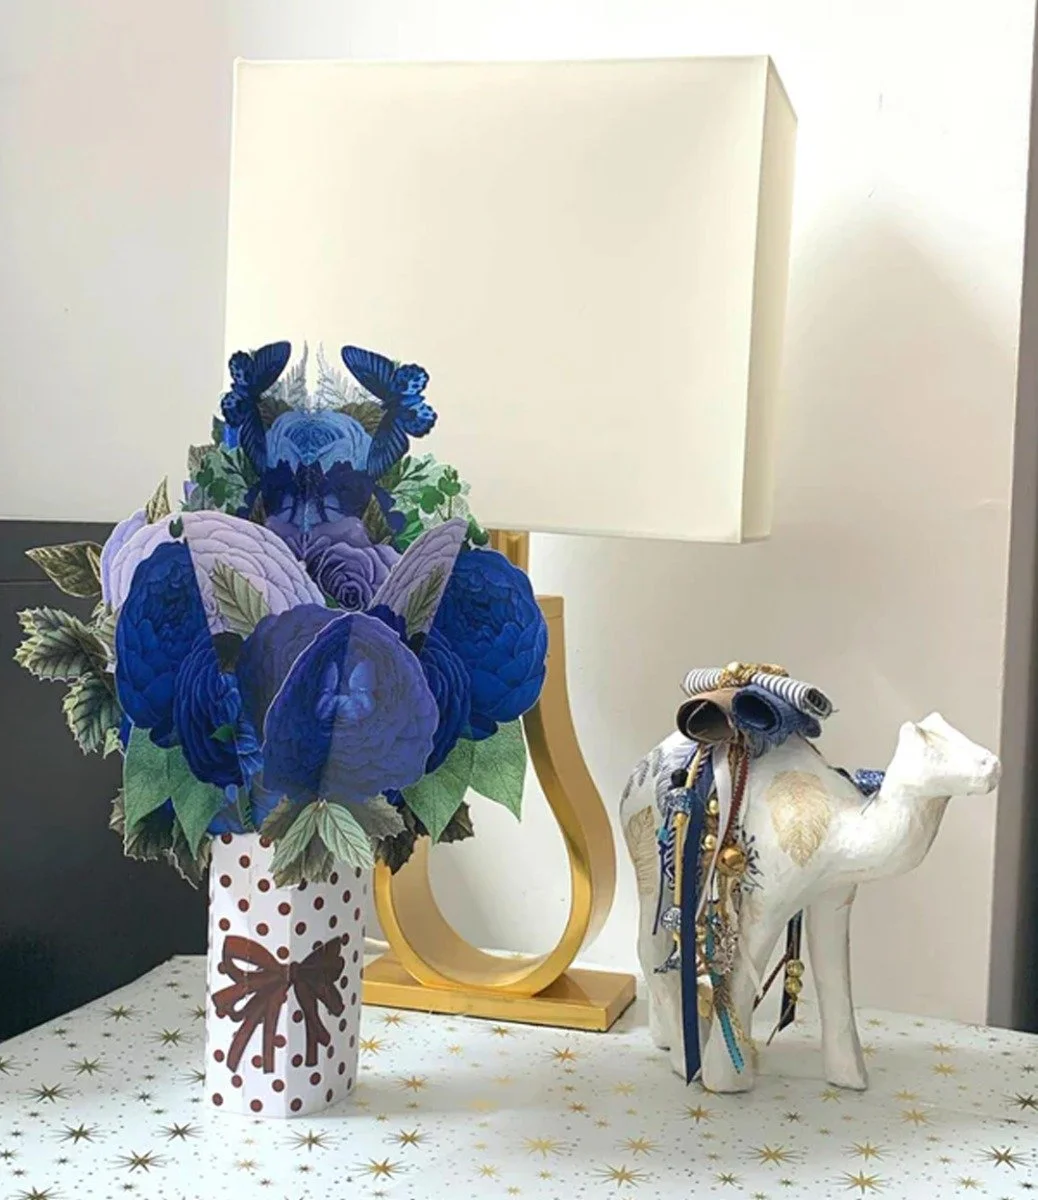 Mixed Blue Flowers Bouquet  3D Pop up Card by Abra Cards 